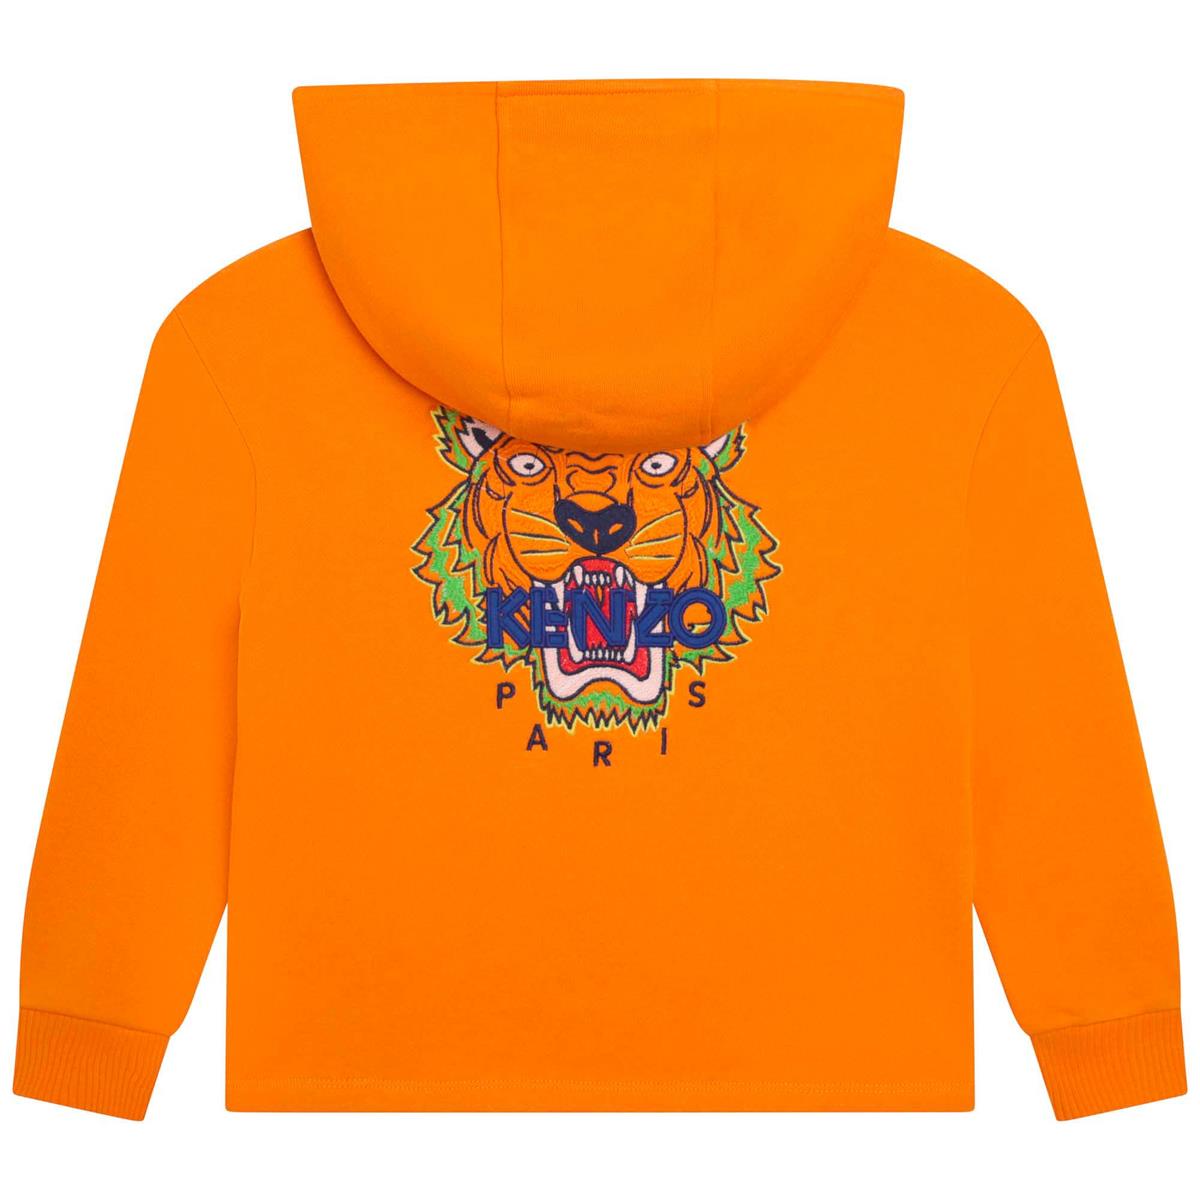 Boys Orange Hooded Sweatshirt